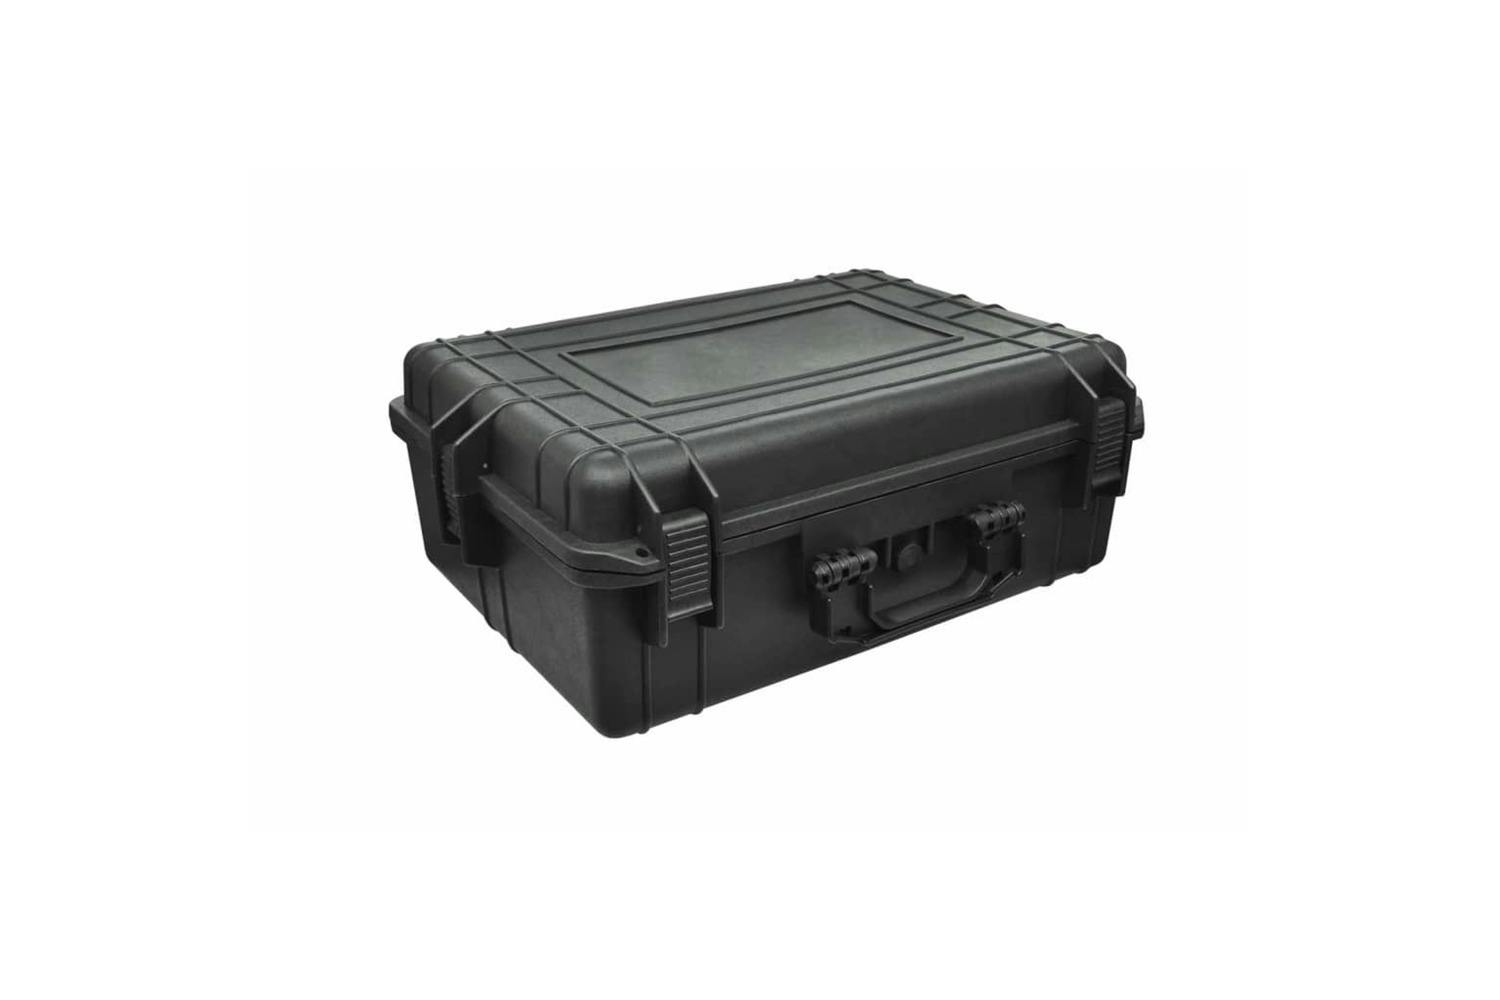 Vidaxl 140173 Transport Hard-case Black W/ Foam 35 Liter Capacity